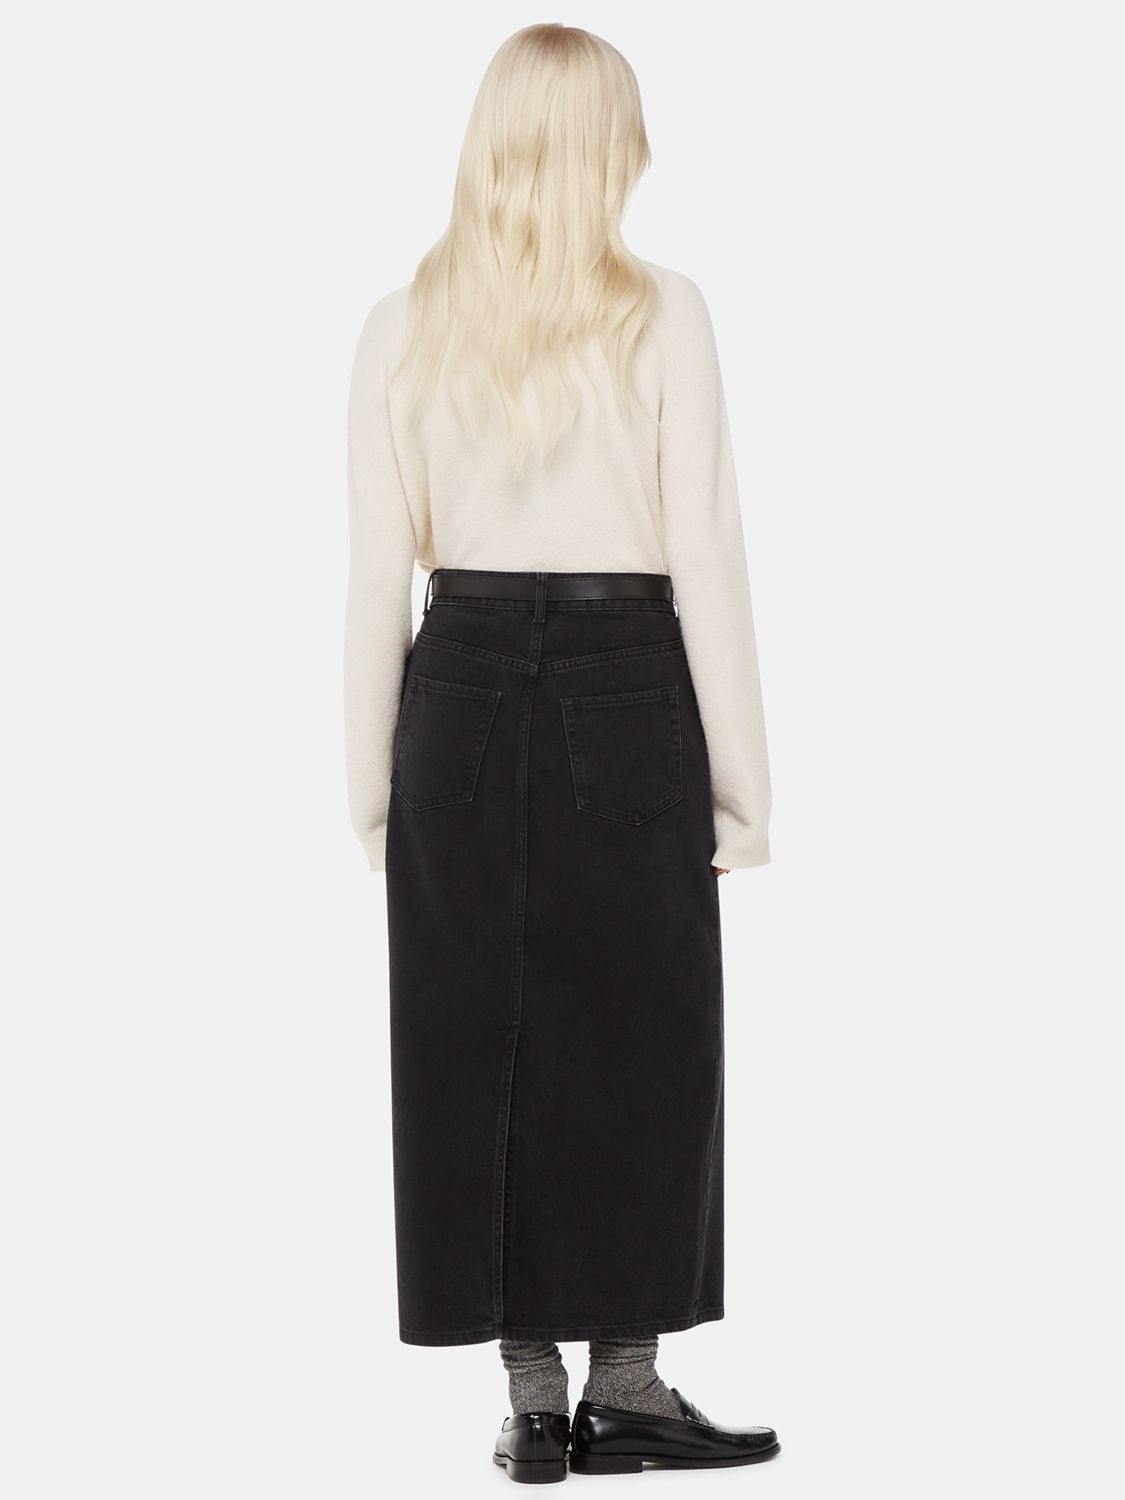 Whistles Petite Straight Denim Midi Skirt, Washed Black, 6